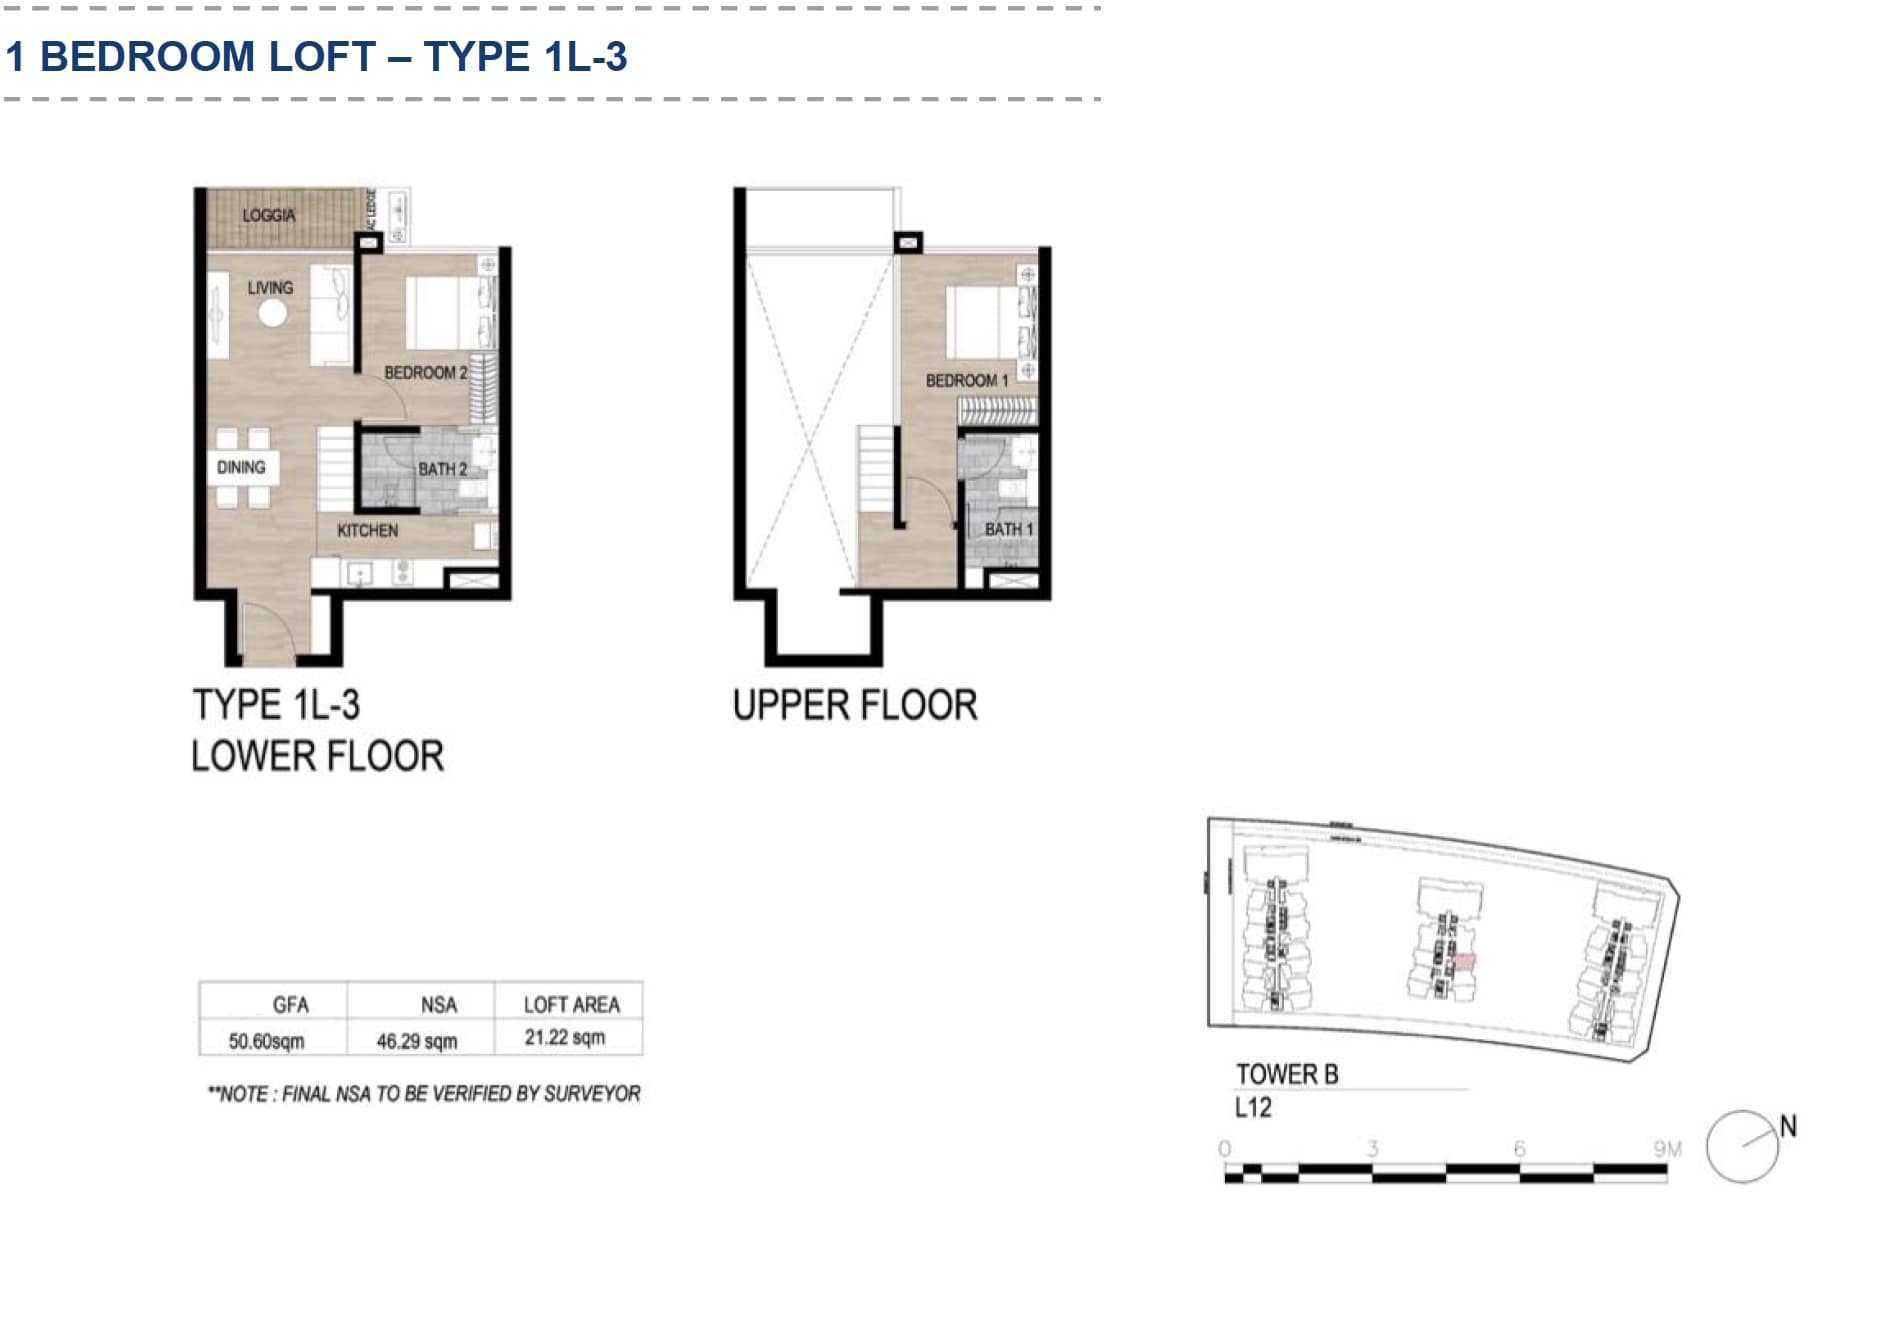 Floor plan of loft Metrople apartment 3